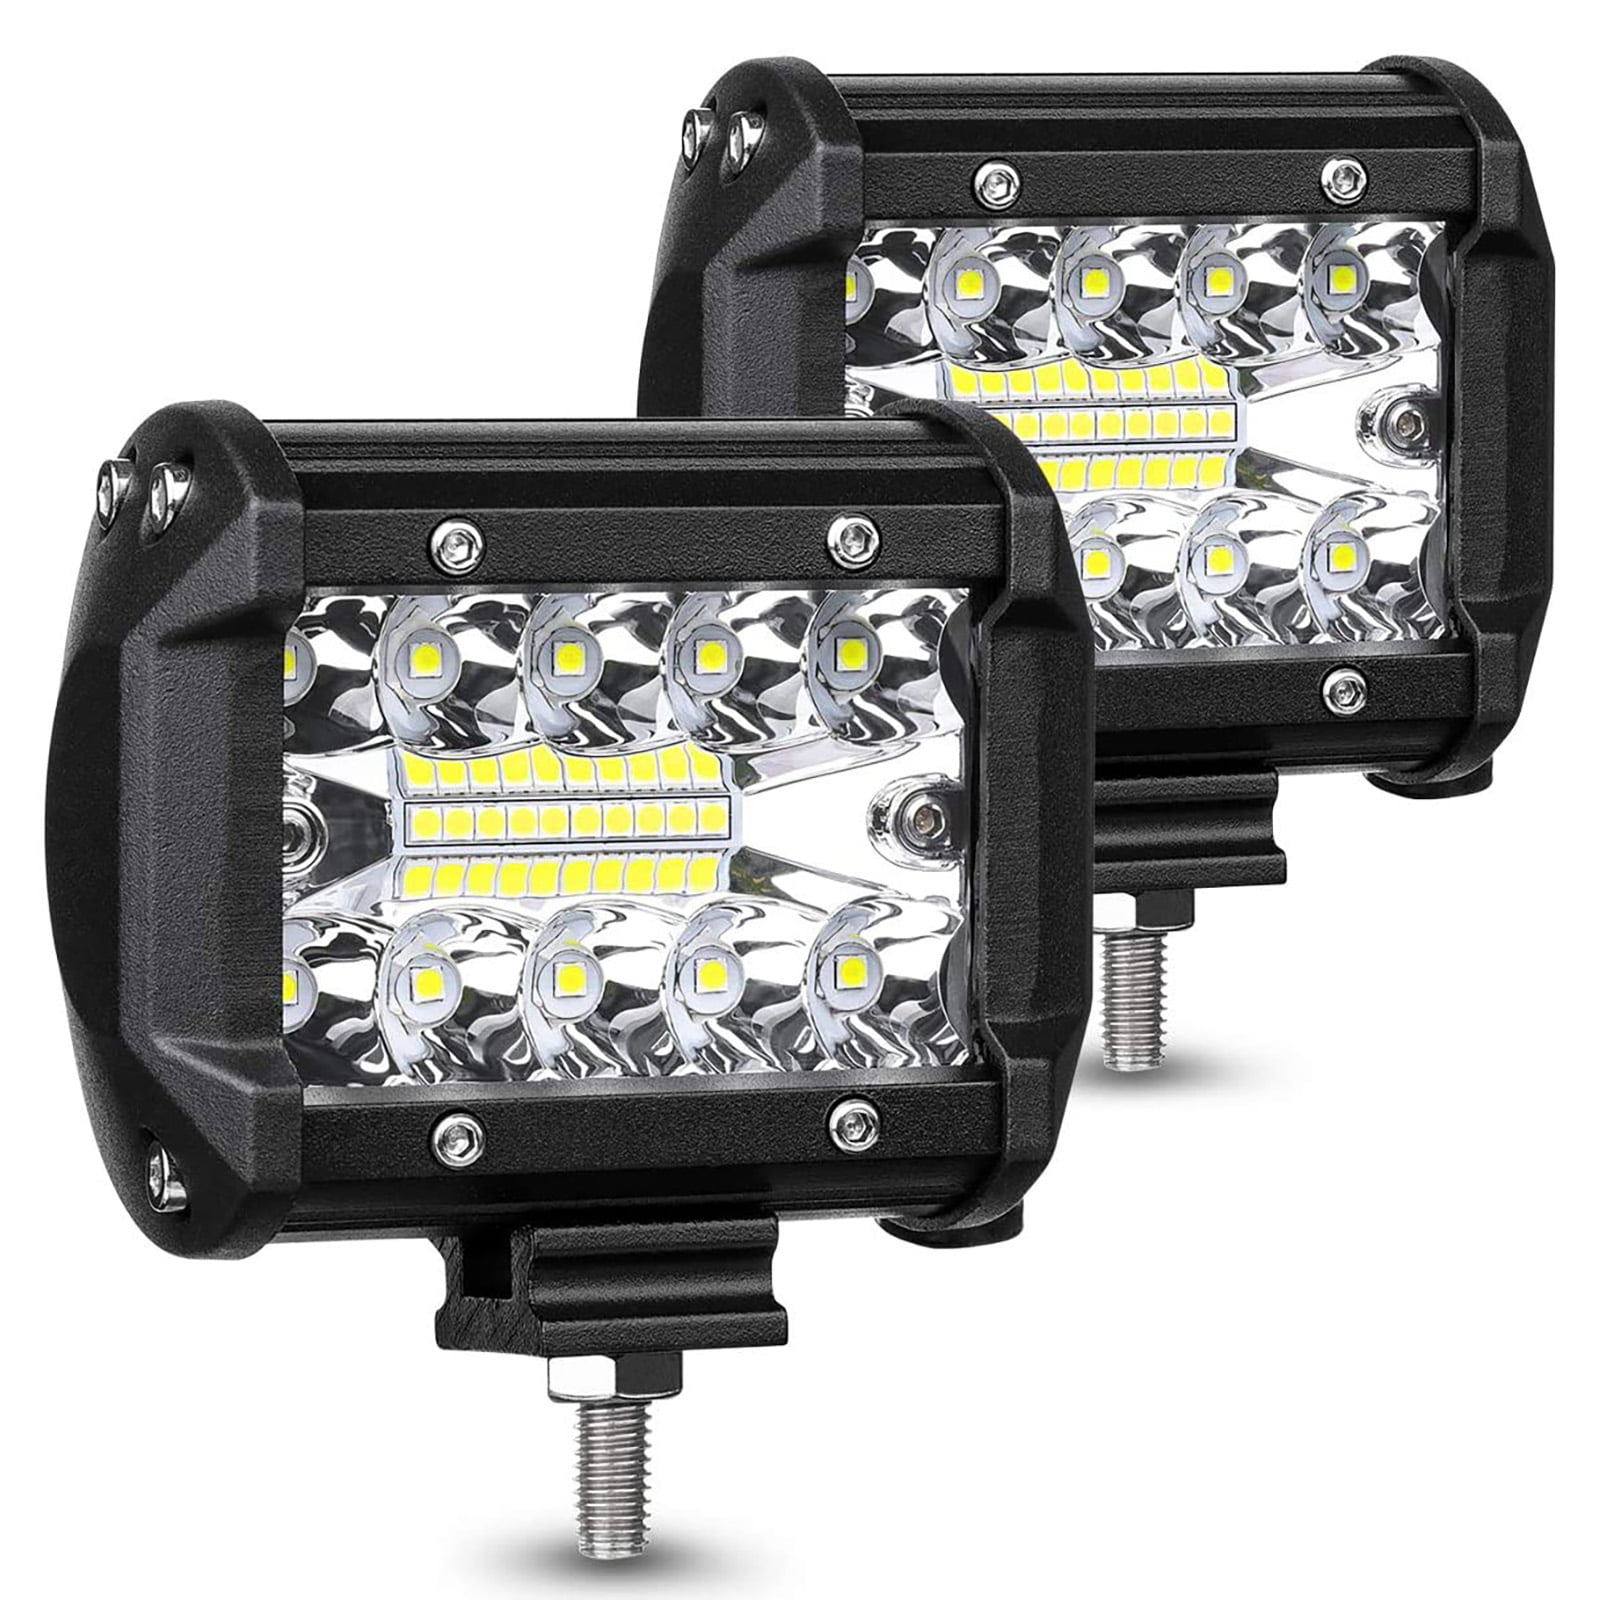 2X 6"Inch 60W LED Work Light Bar Flood Spot Combo Fog Lamp Offroad Driving Truck